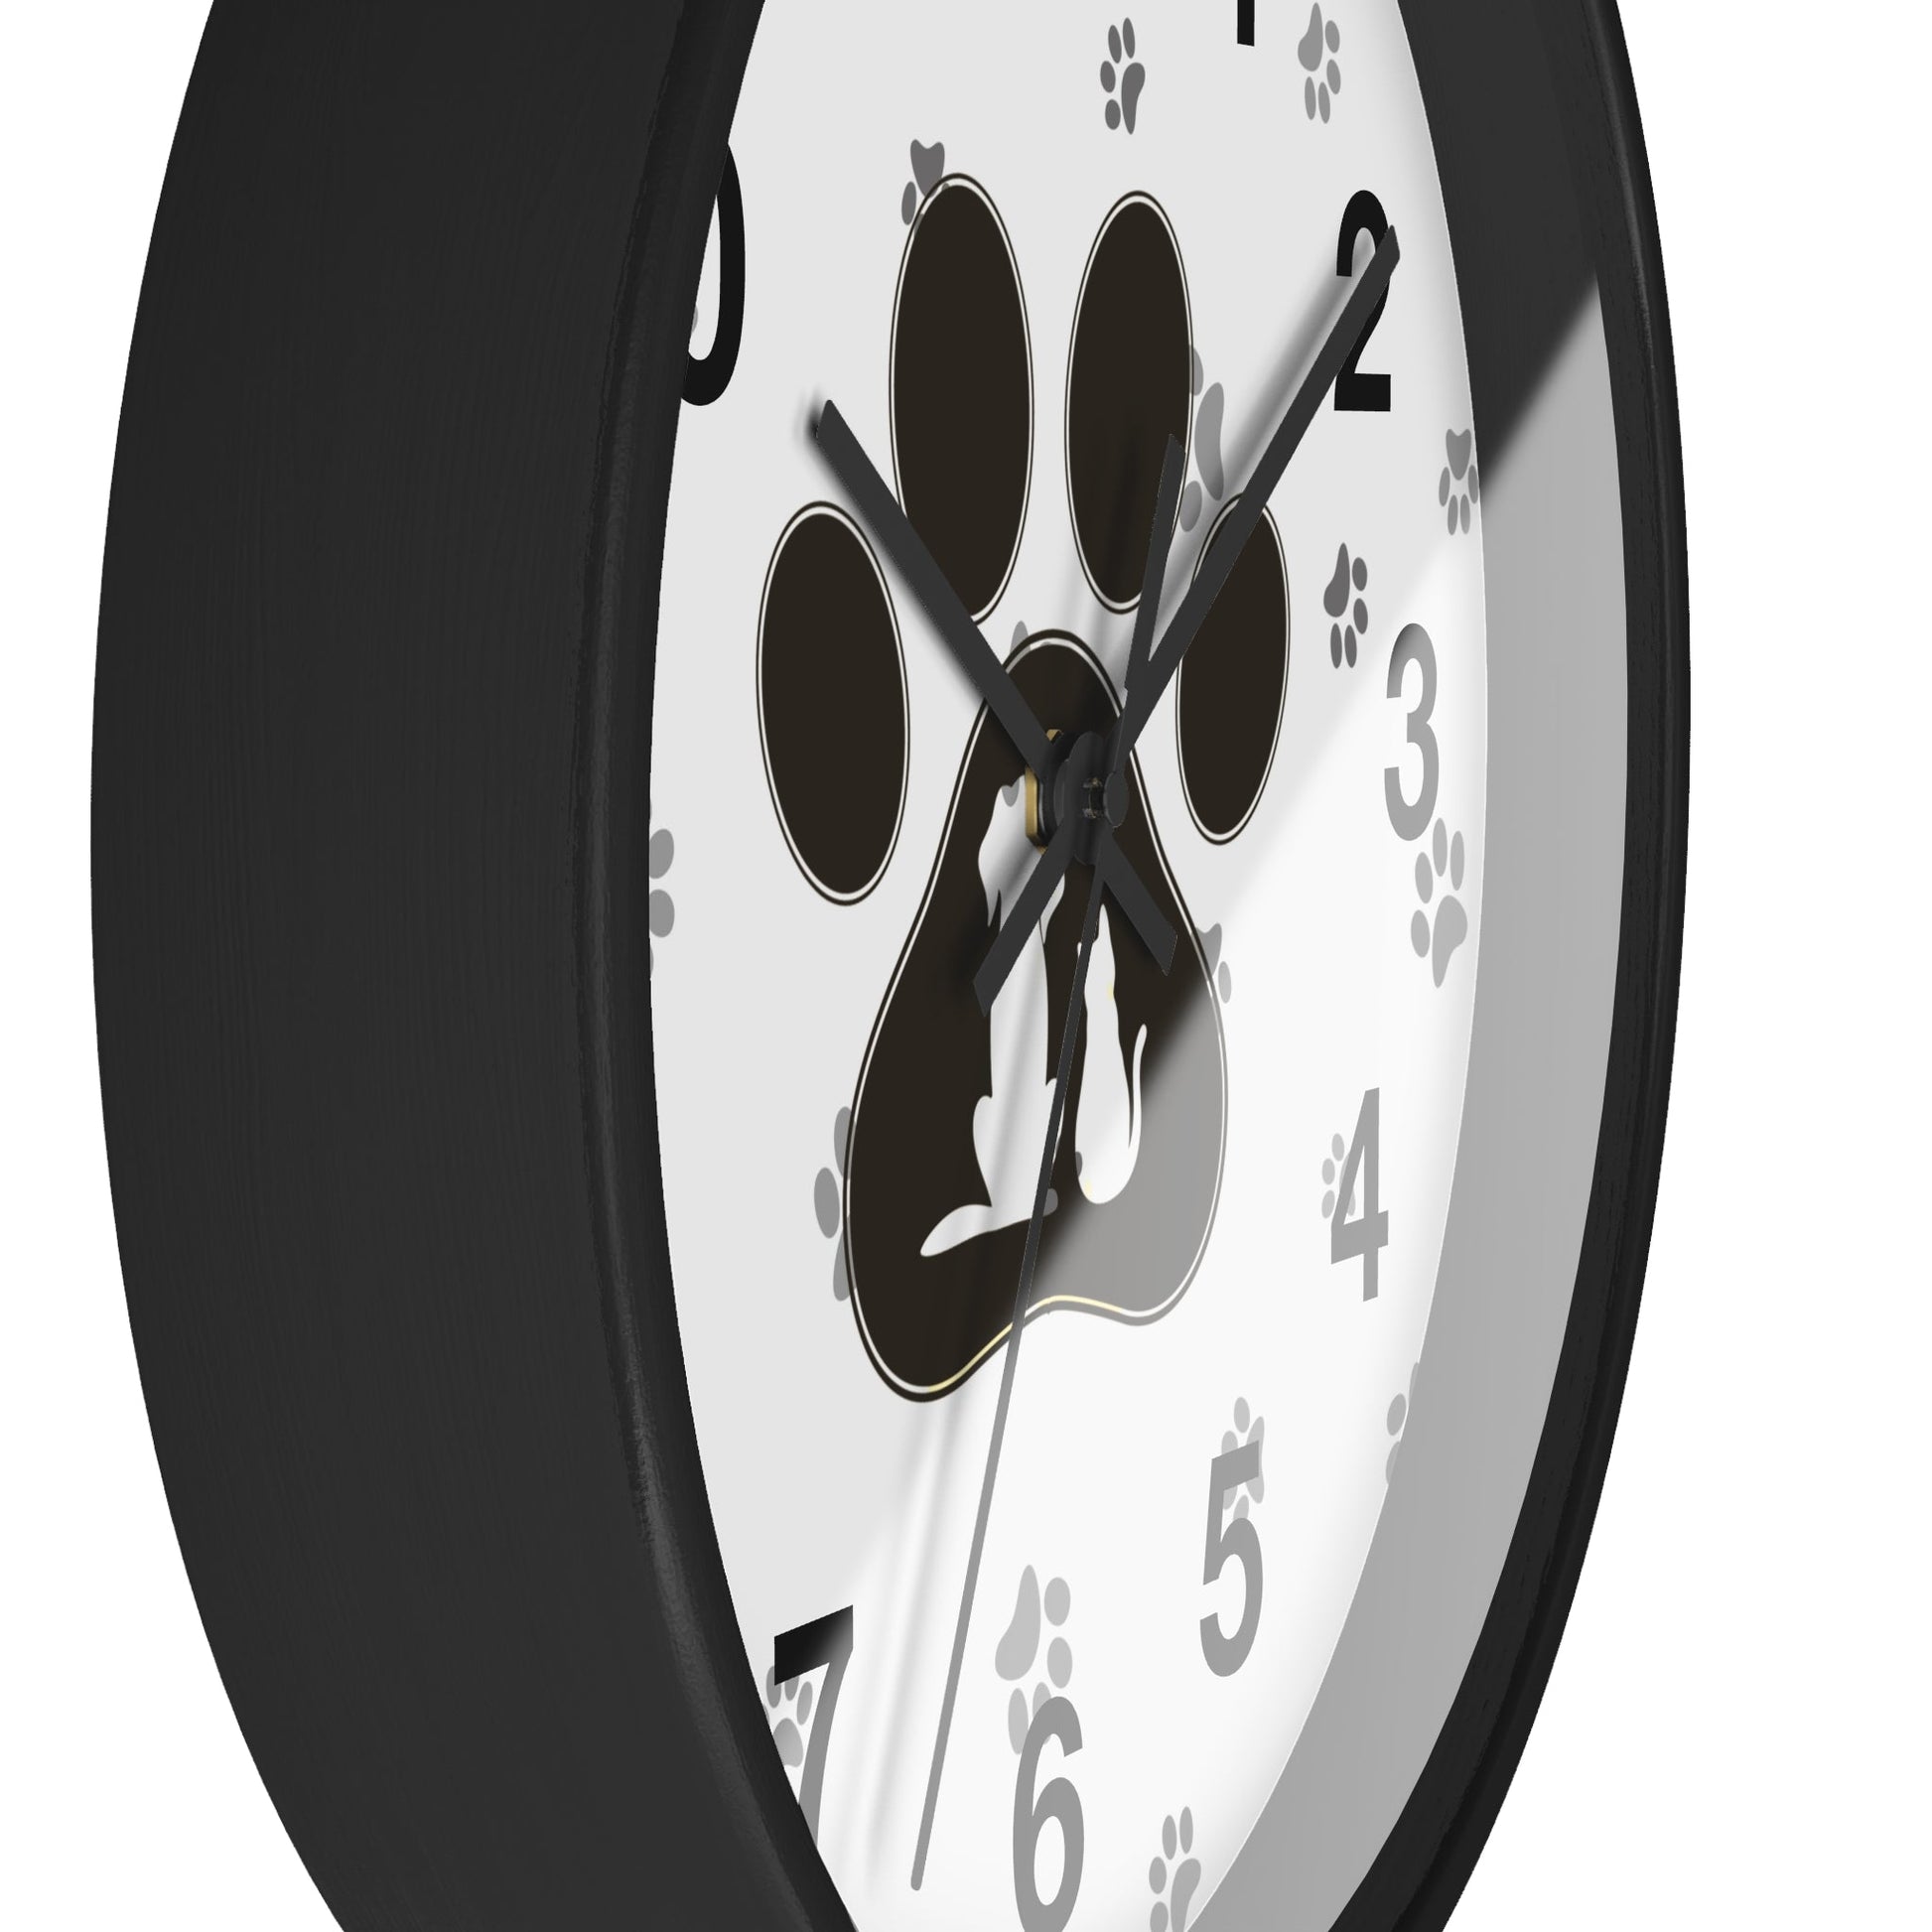 Pet Paws Wall Clock - Home Decor - Epileptic Al’s Shop